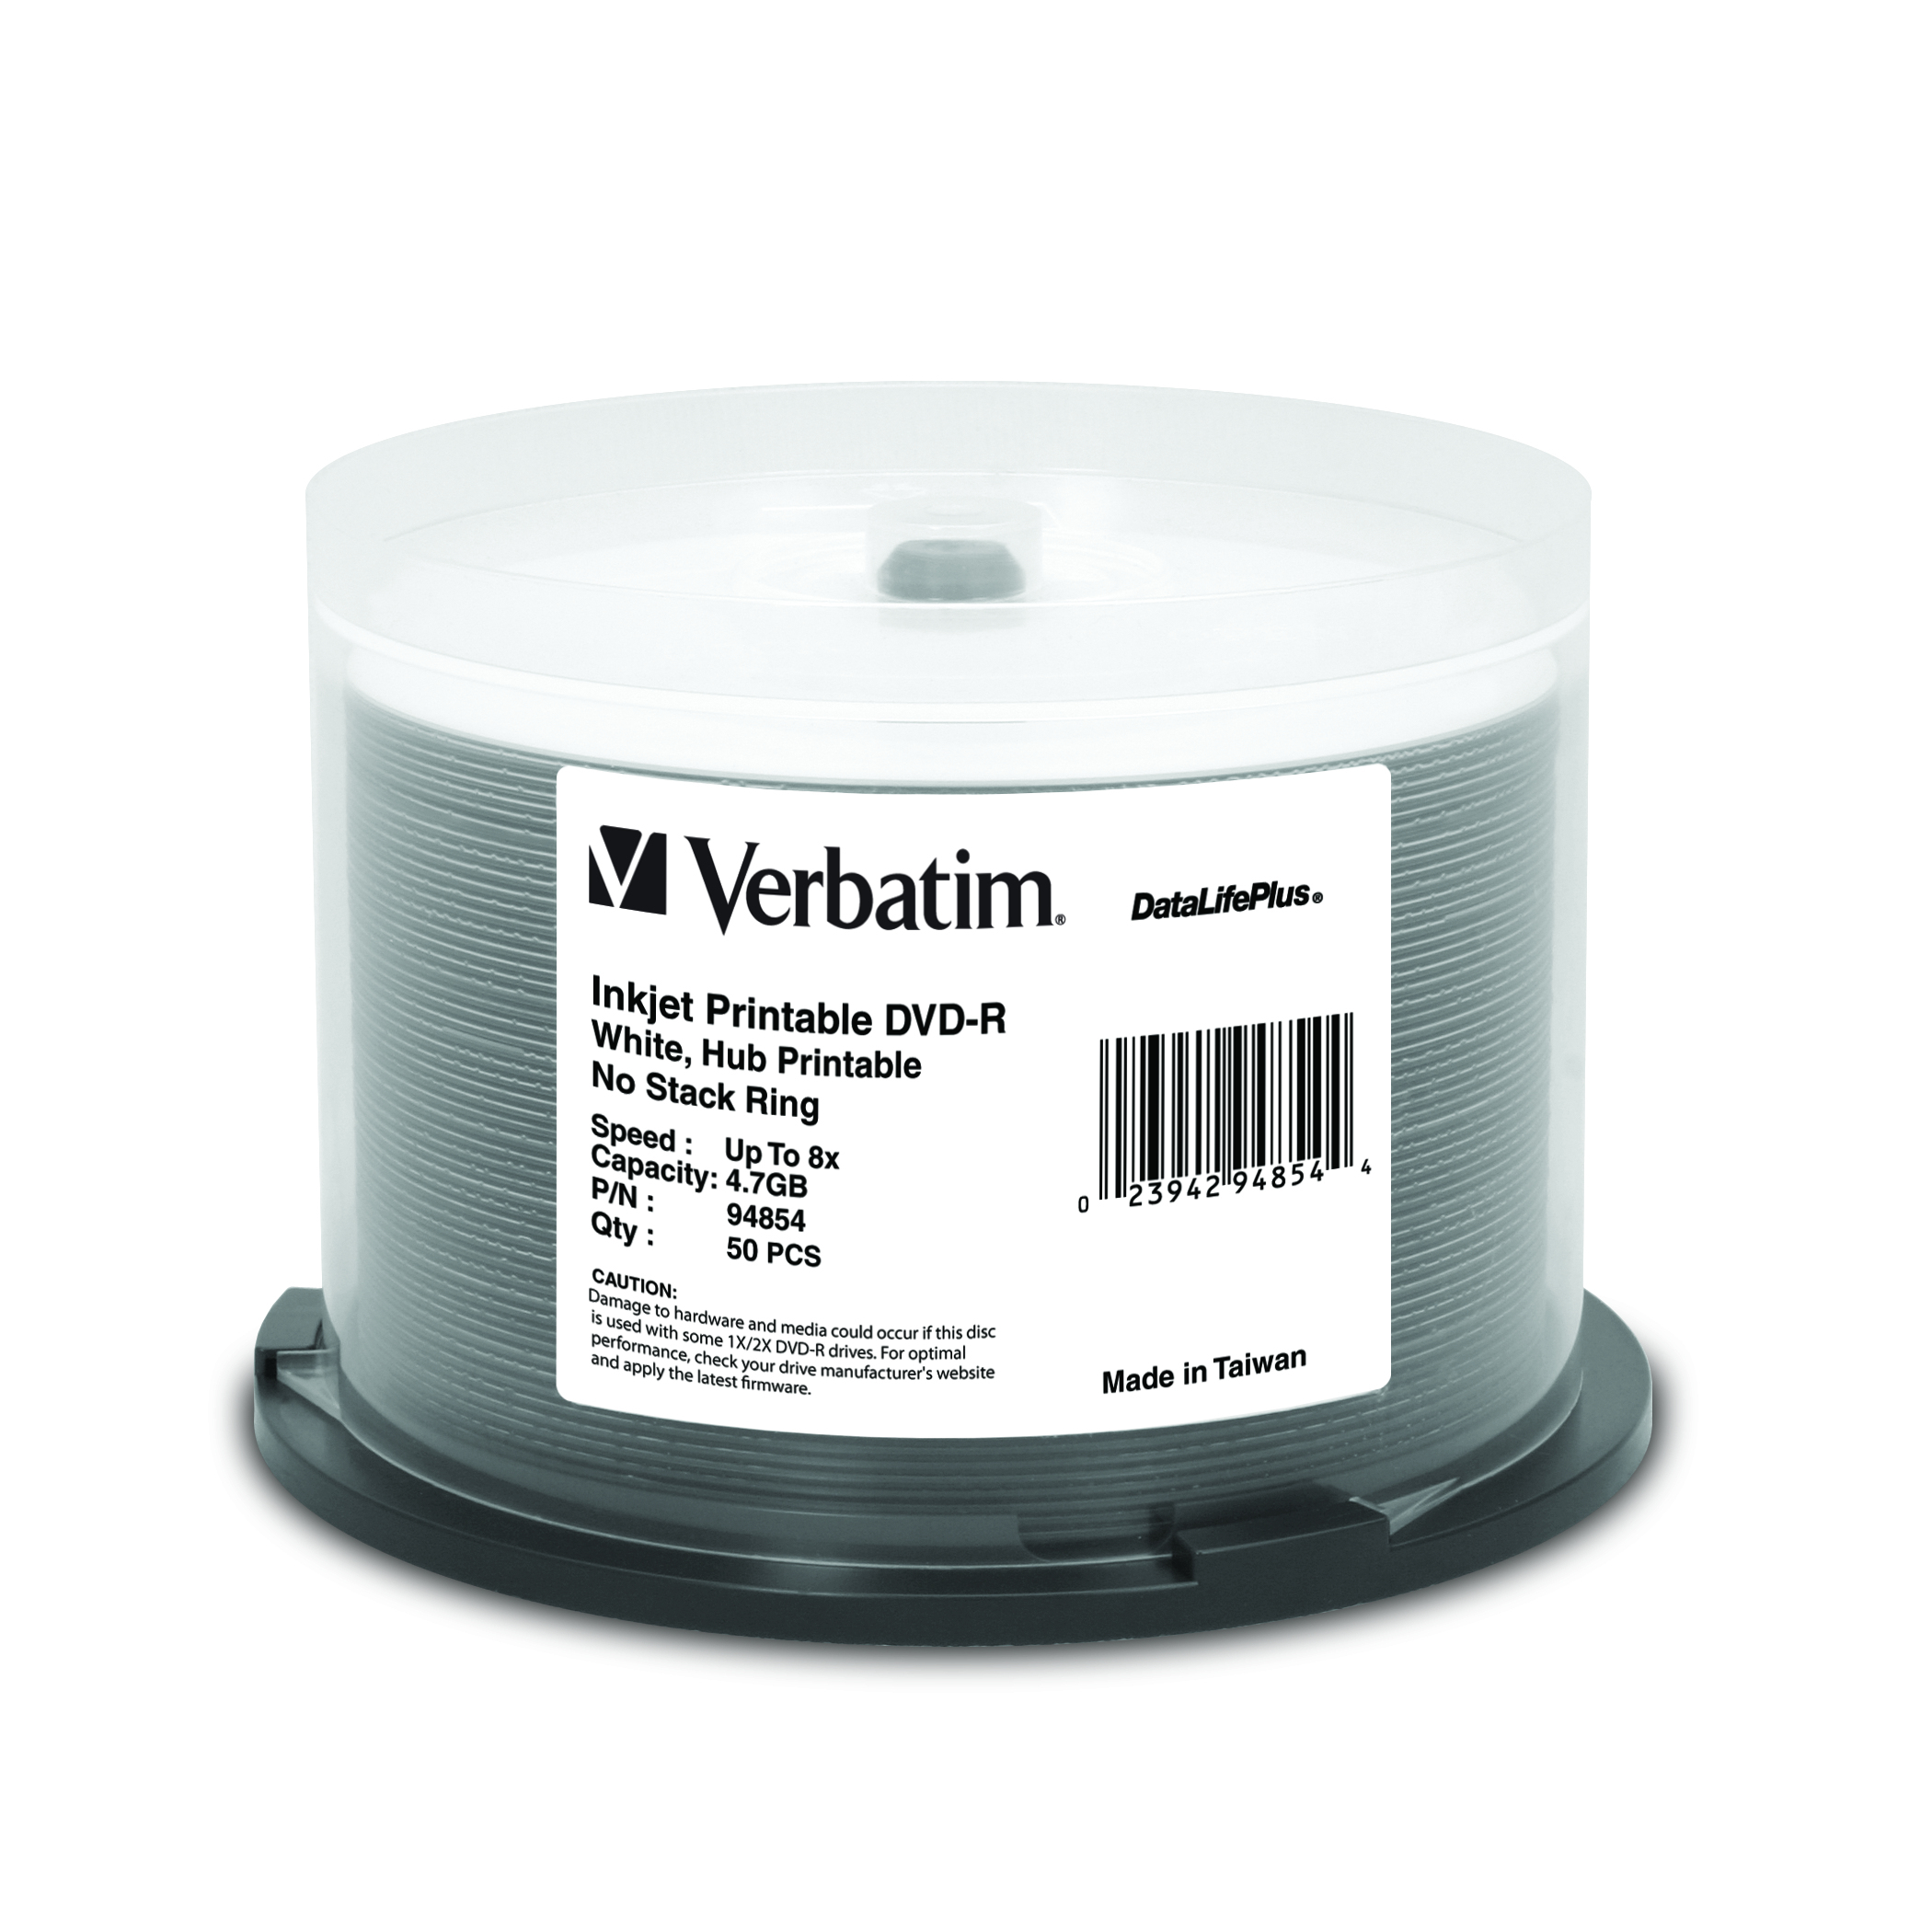 Verbatim DataLifePlus DVD-R Media 4.7 GB 50 pcs www.LaserPlusImaging.com